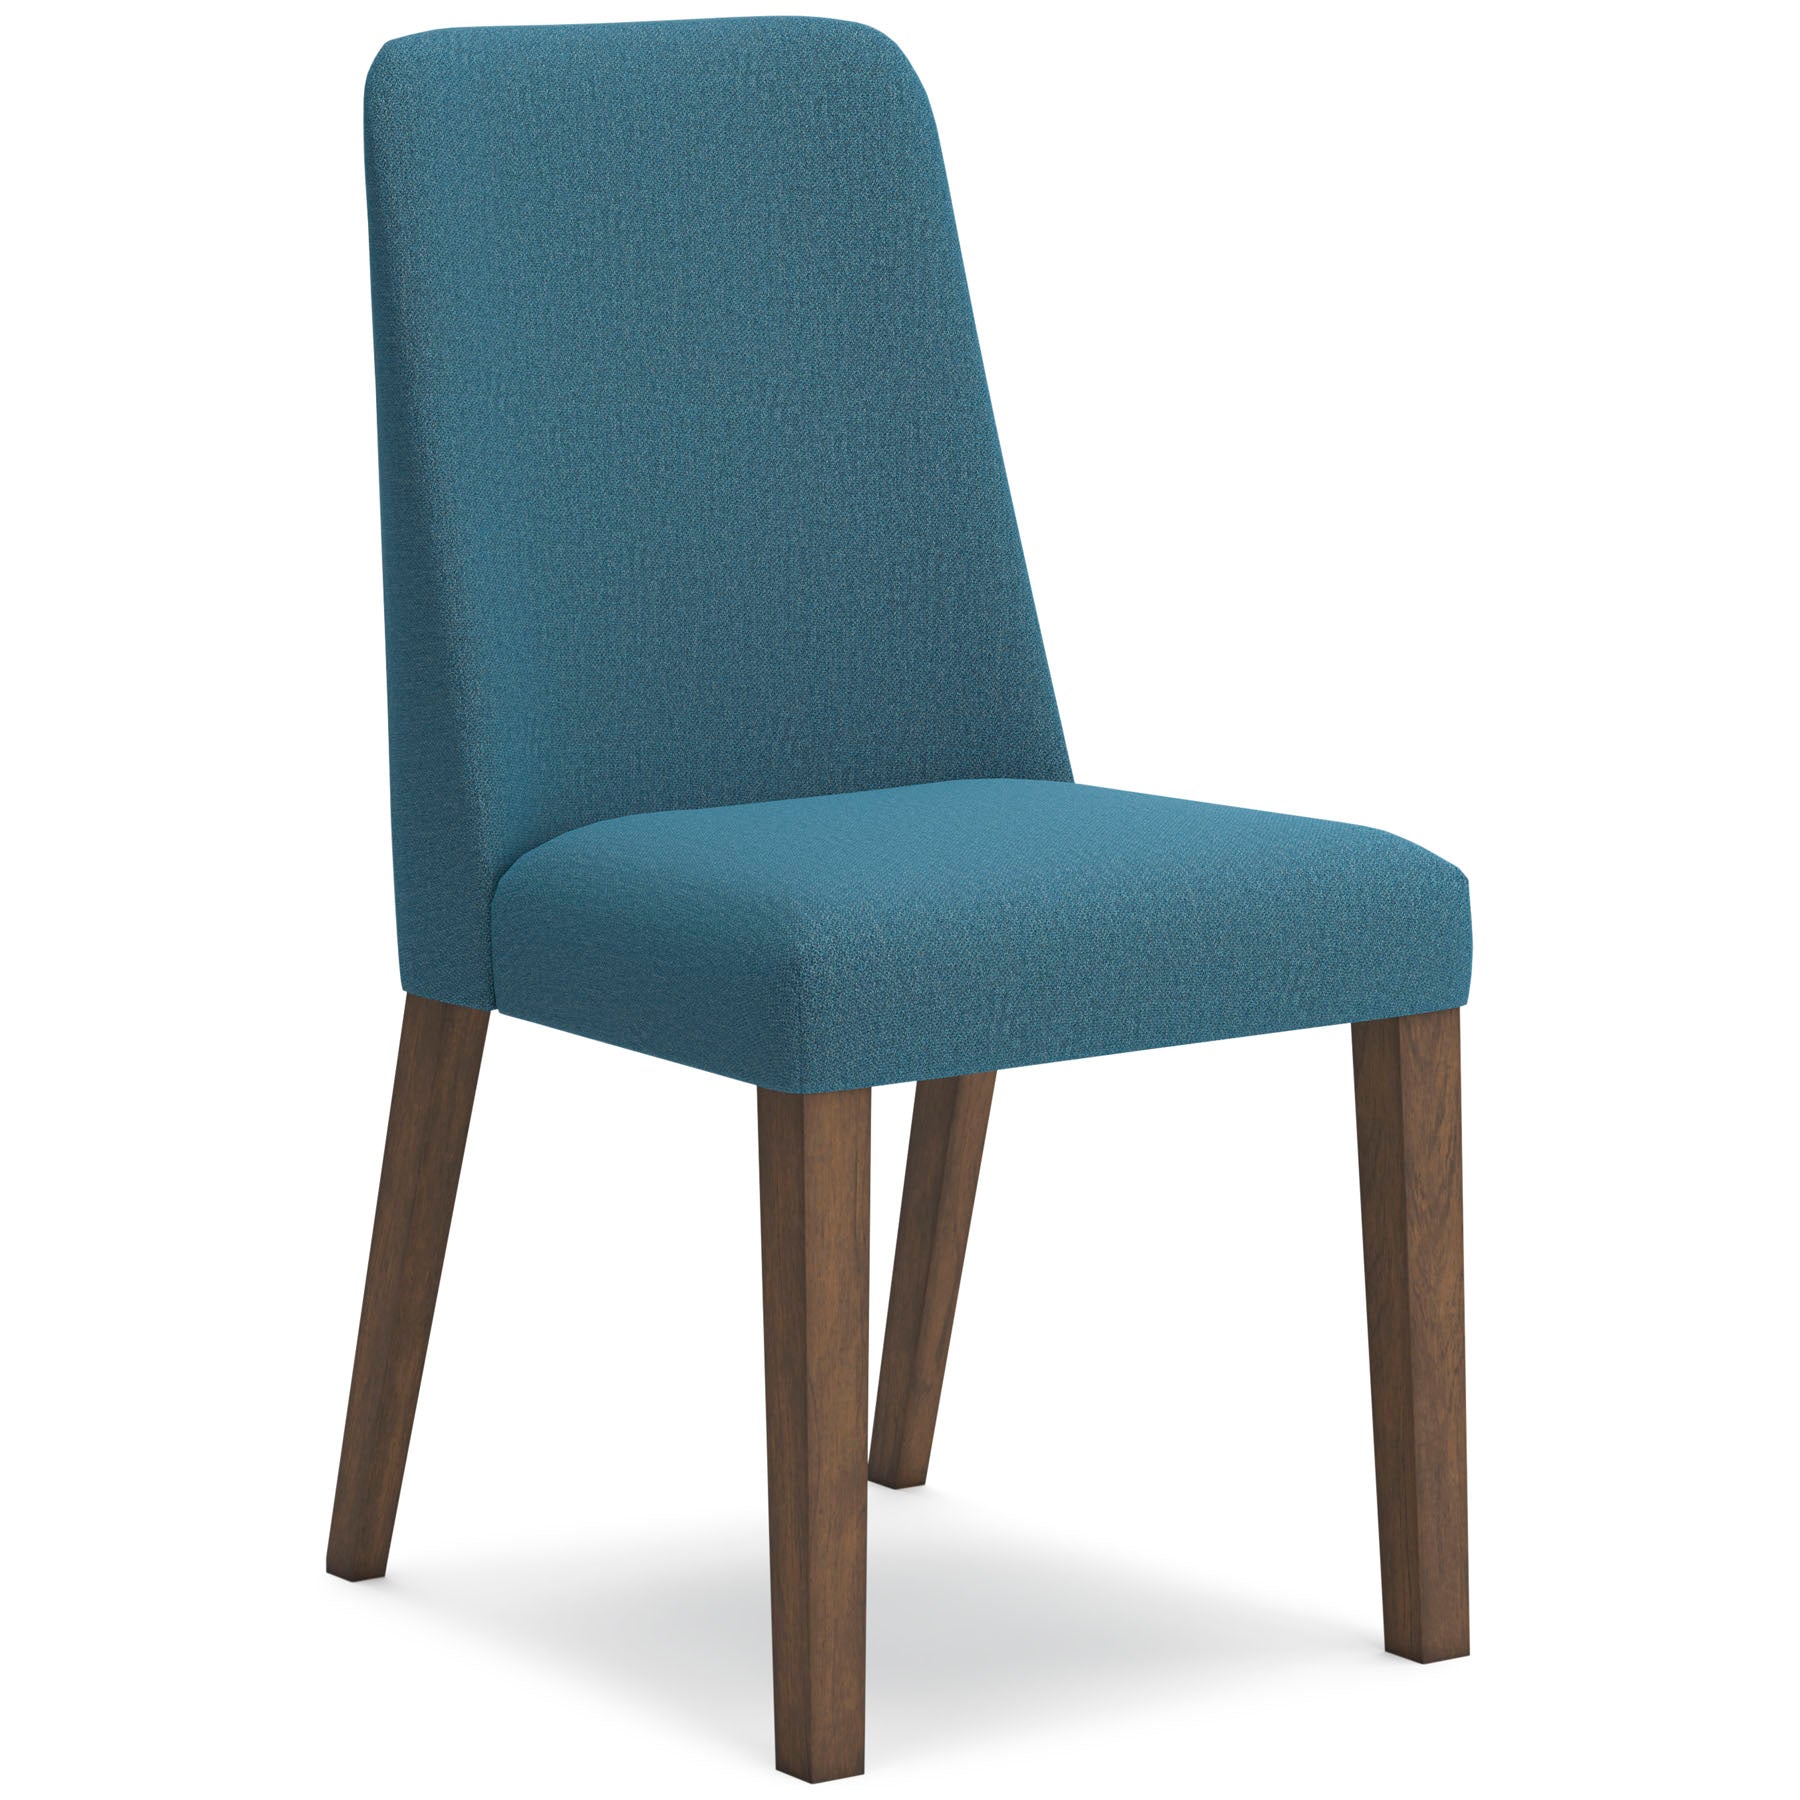 Lyncott Blue Dining Chair - MJM Furniture